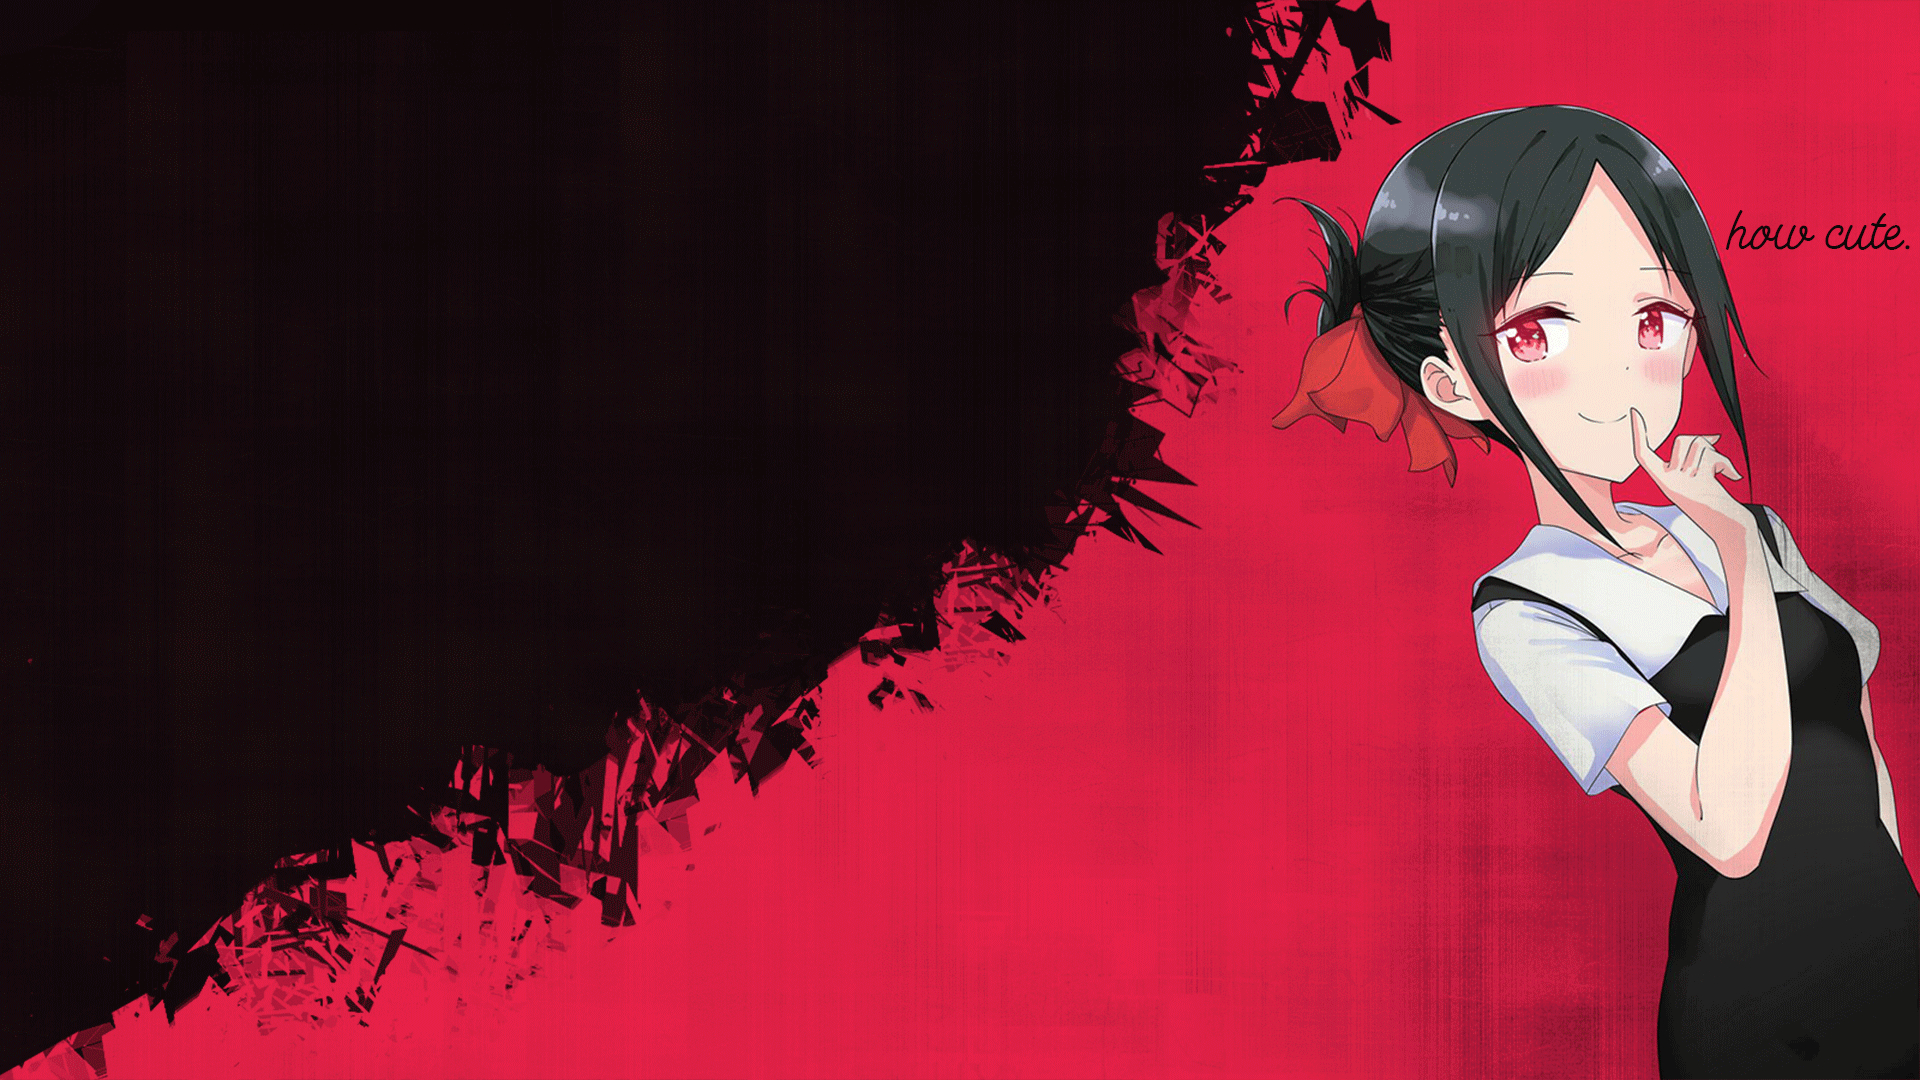 Kaguya Shinomiya Wallpaper, HD Anime 4K Wallpapers, Images, Photos and  Background - Wallpapers Den